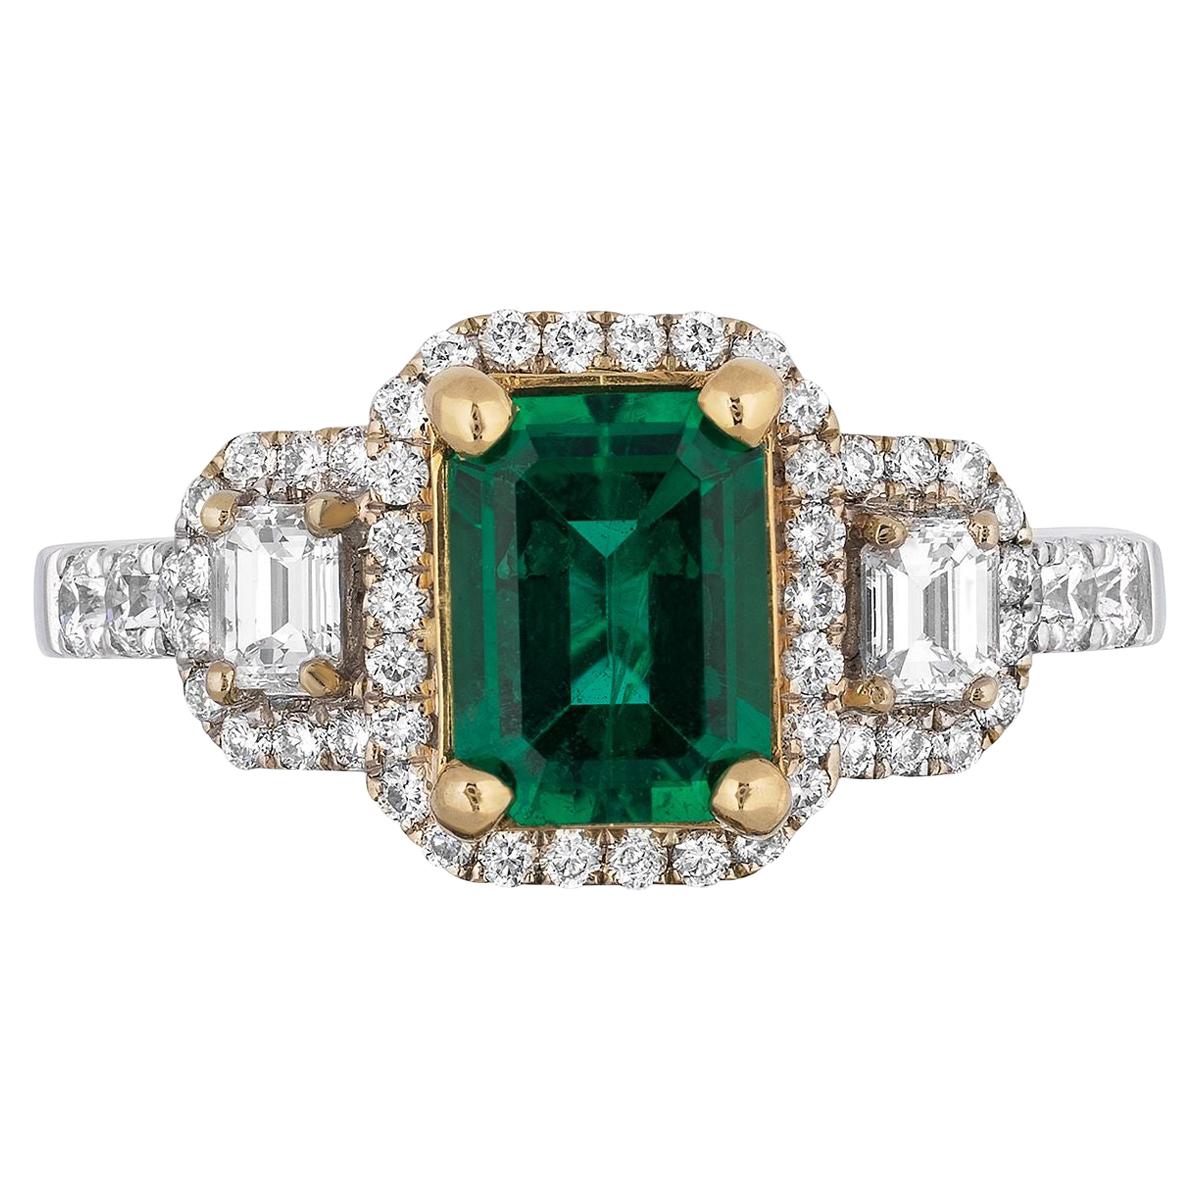 1.24 Carat Zambian Emerald Diamond Cocktail Ring